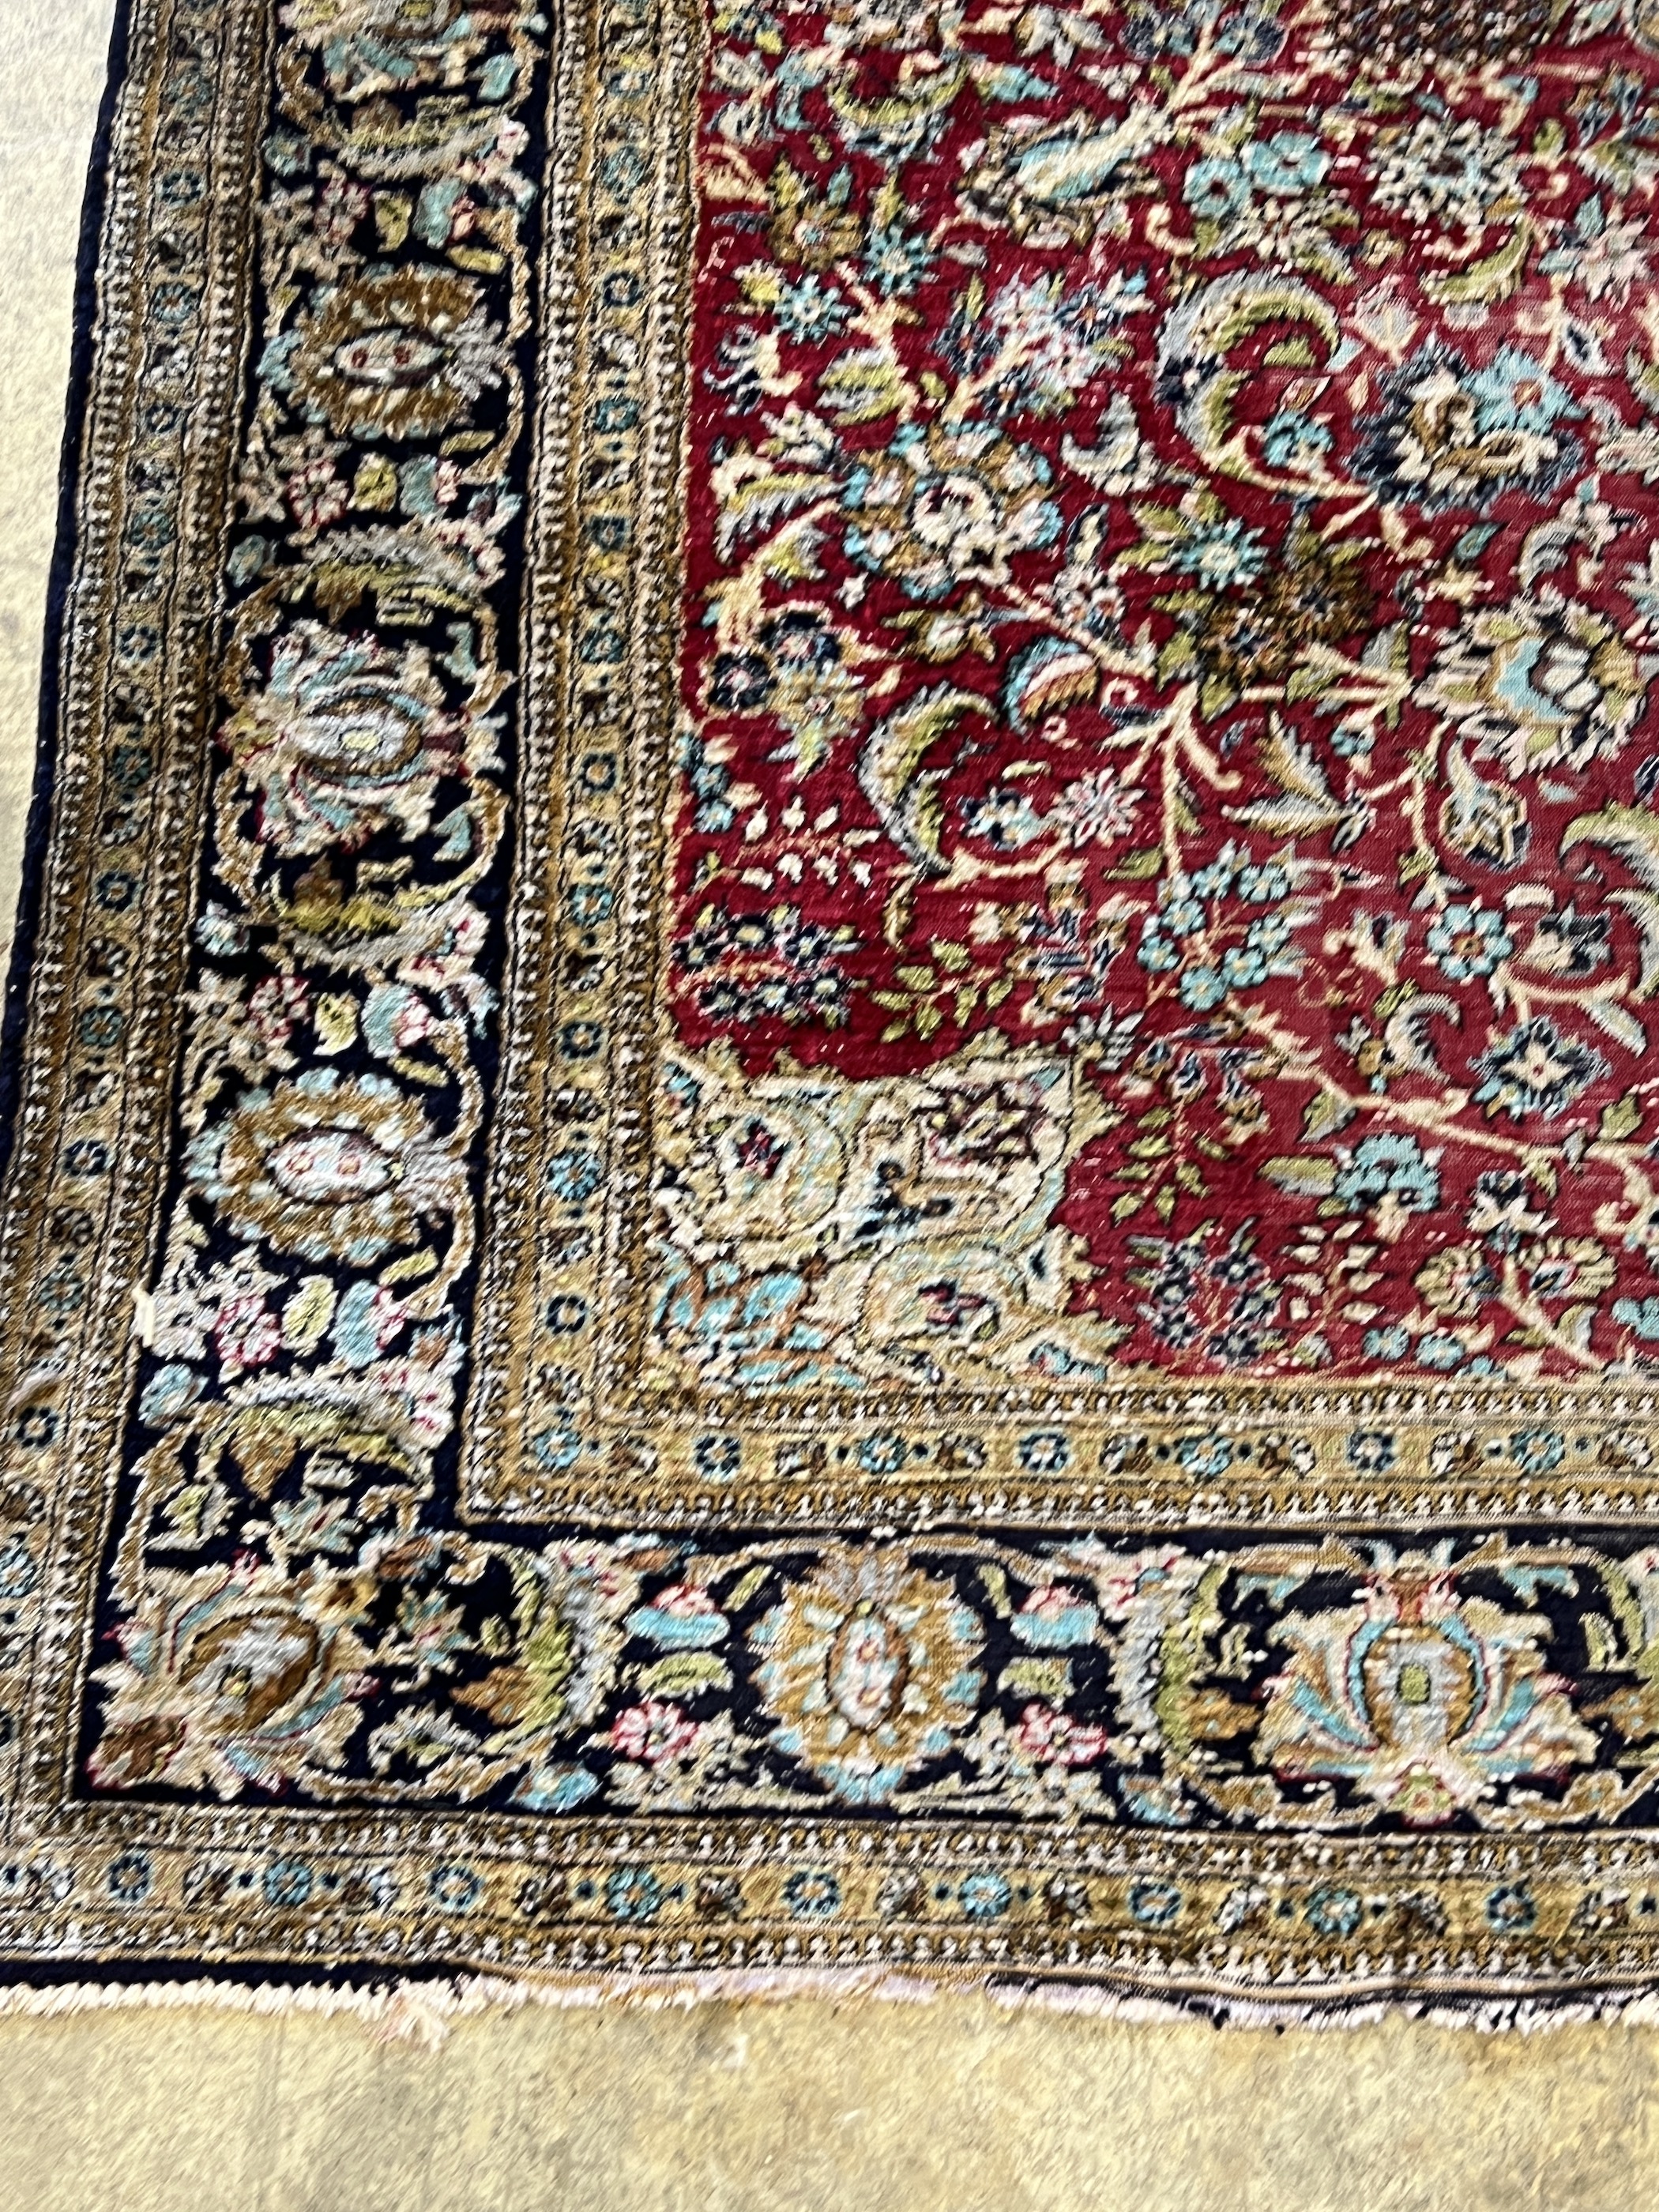 A Tabriz part silk burgundy ground rug, 218 x 150cm